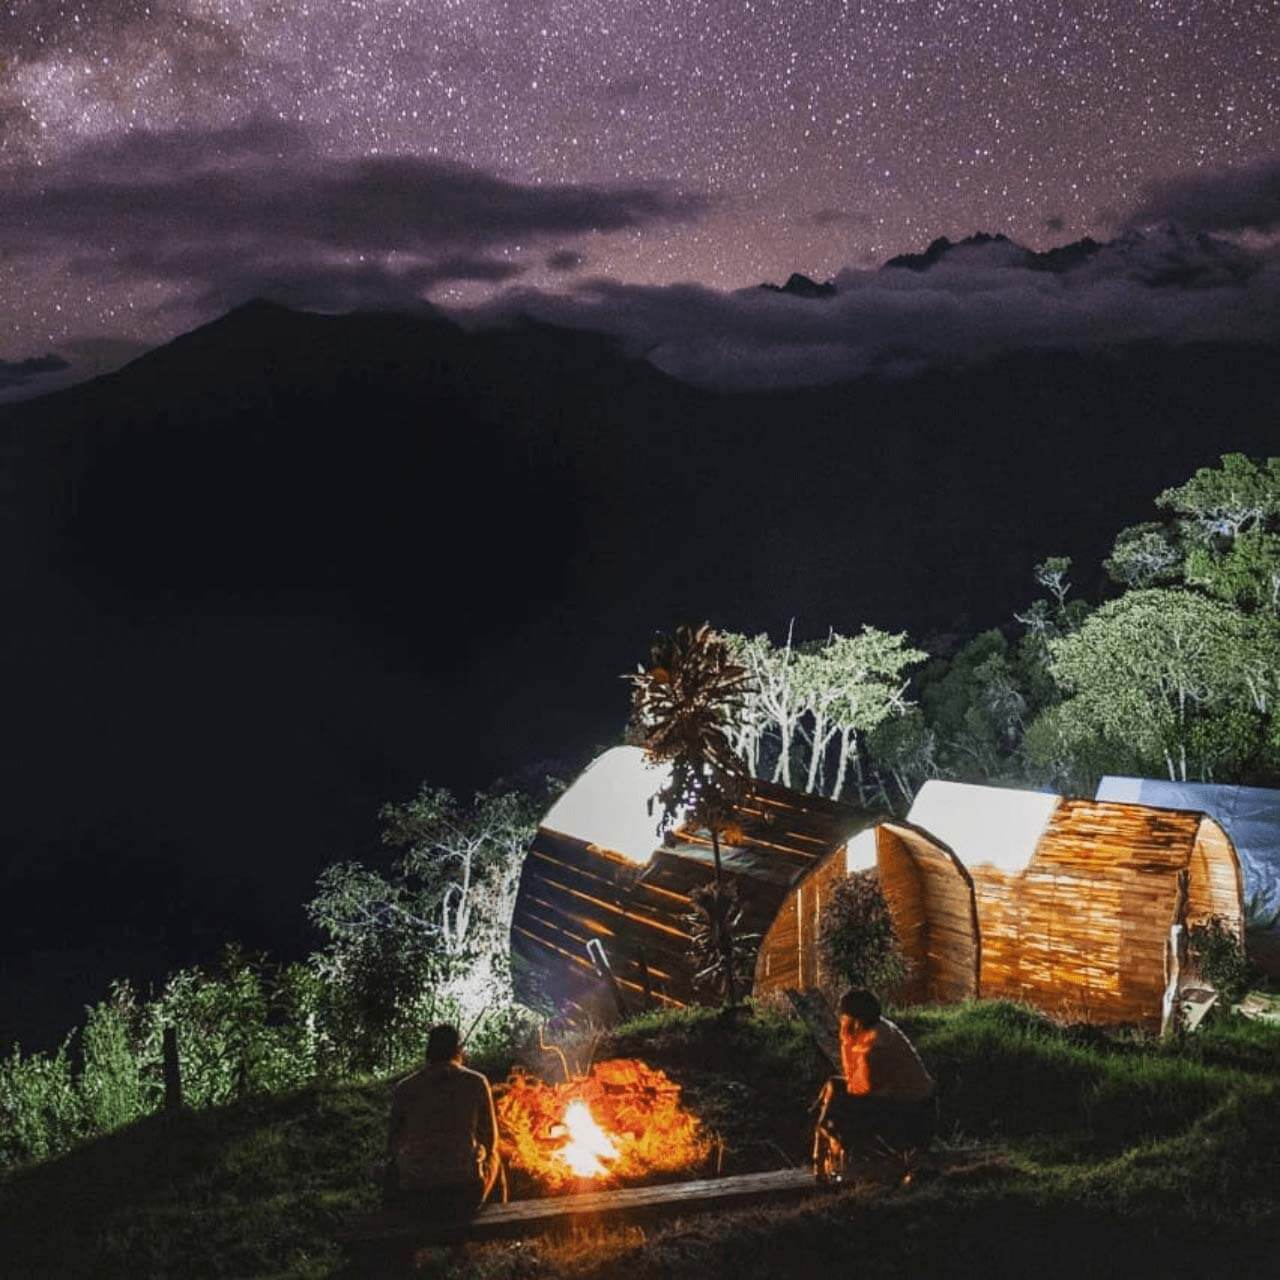 Llactapata Lodge overlooking Machu Picchu